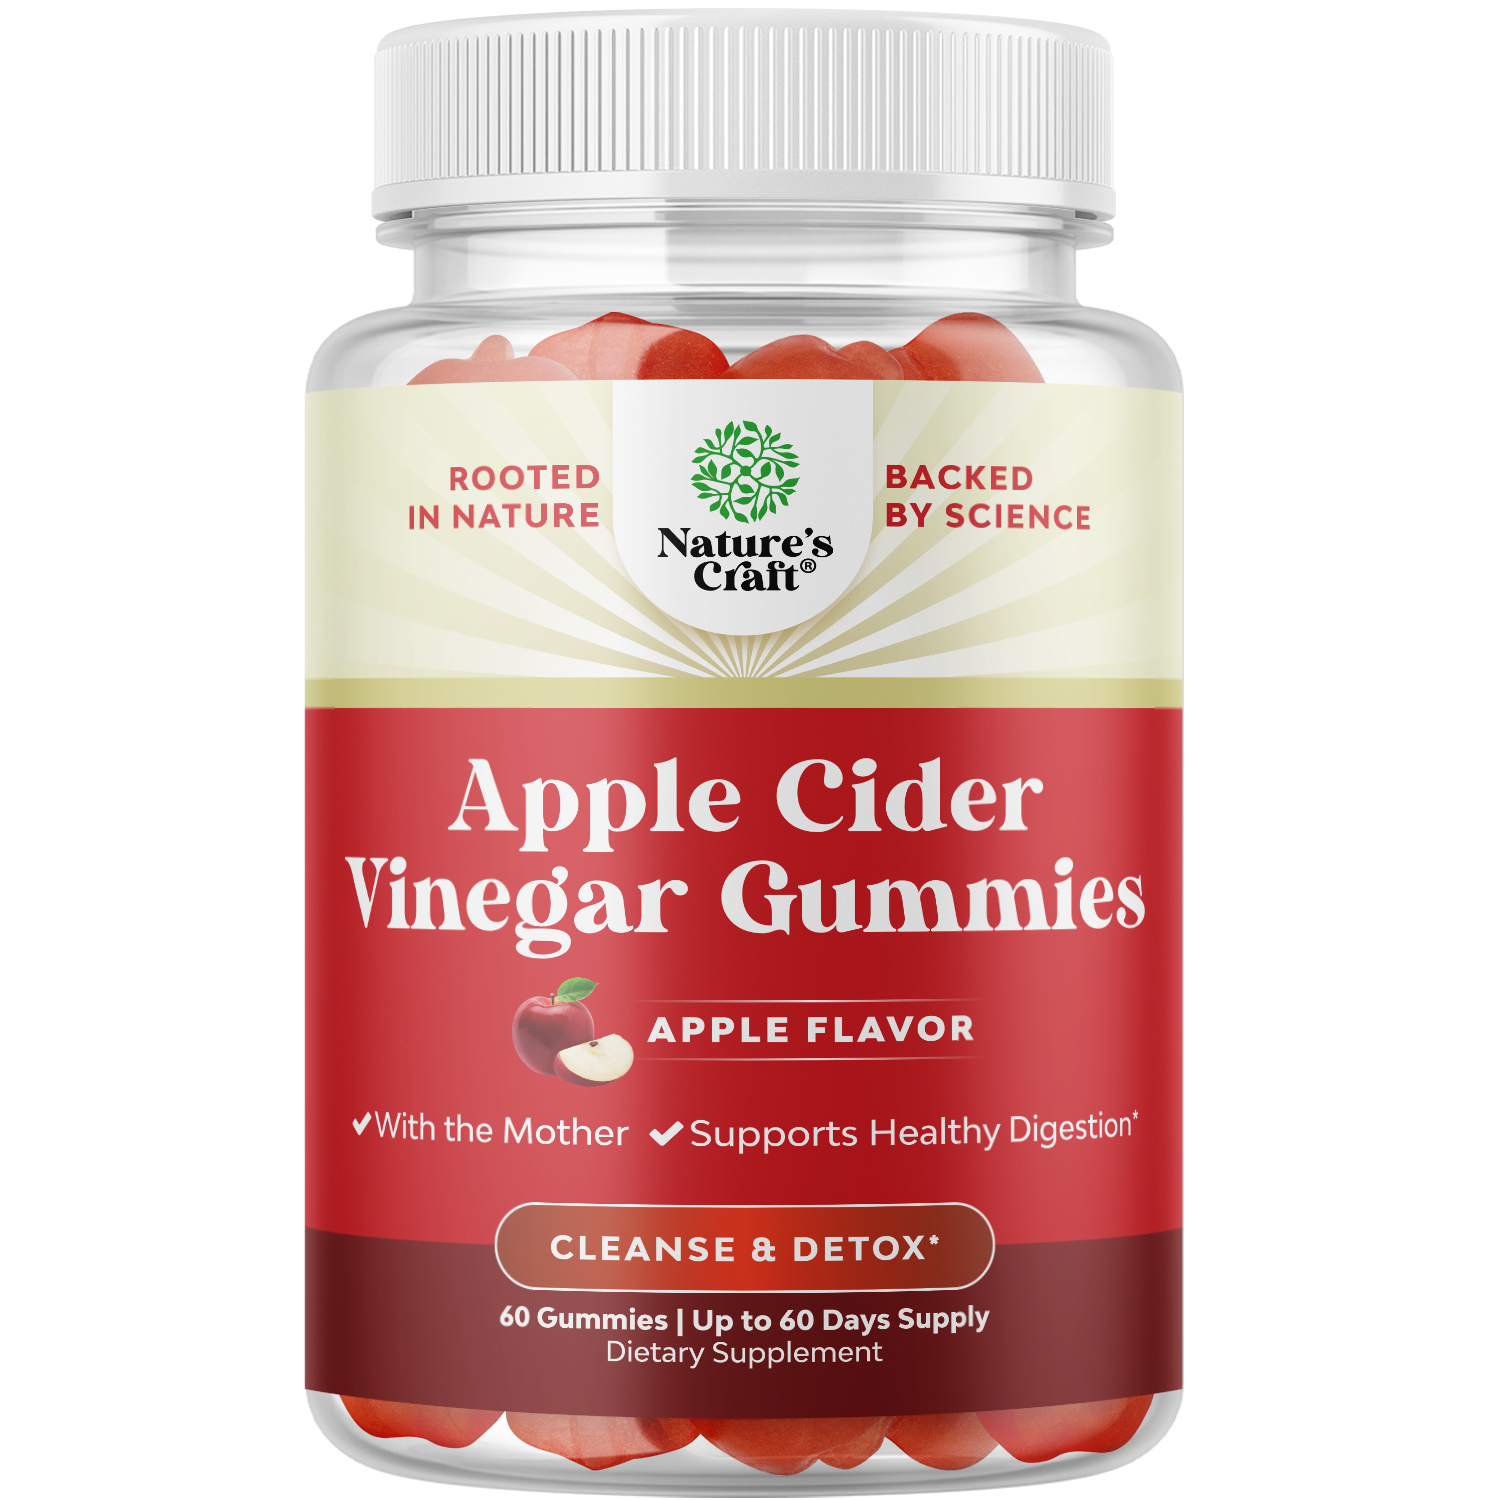 Apple Cider Vinegar Gummies - Apple Flavor